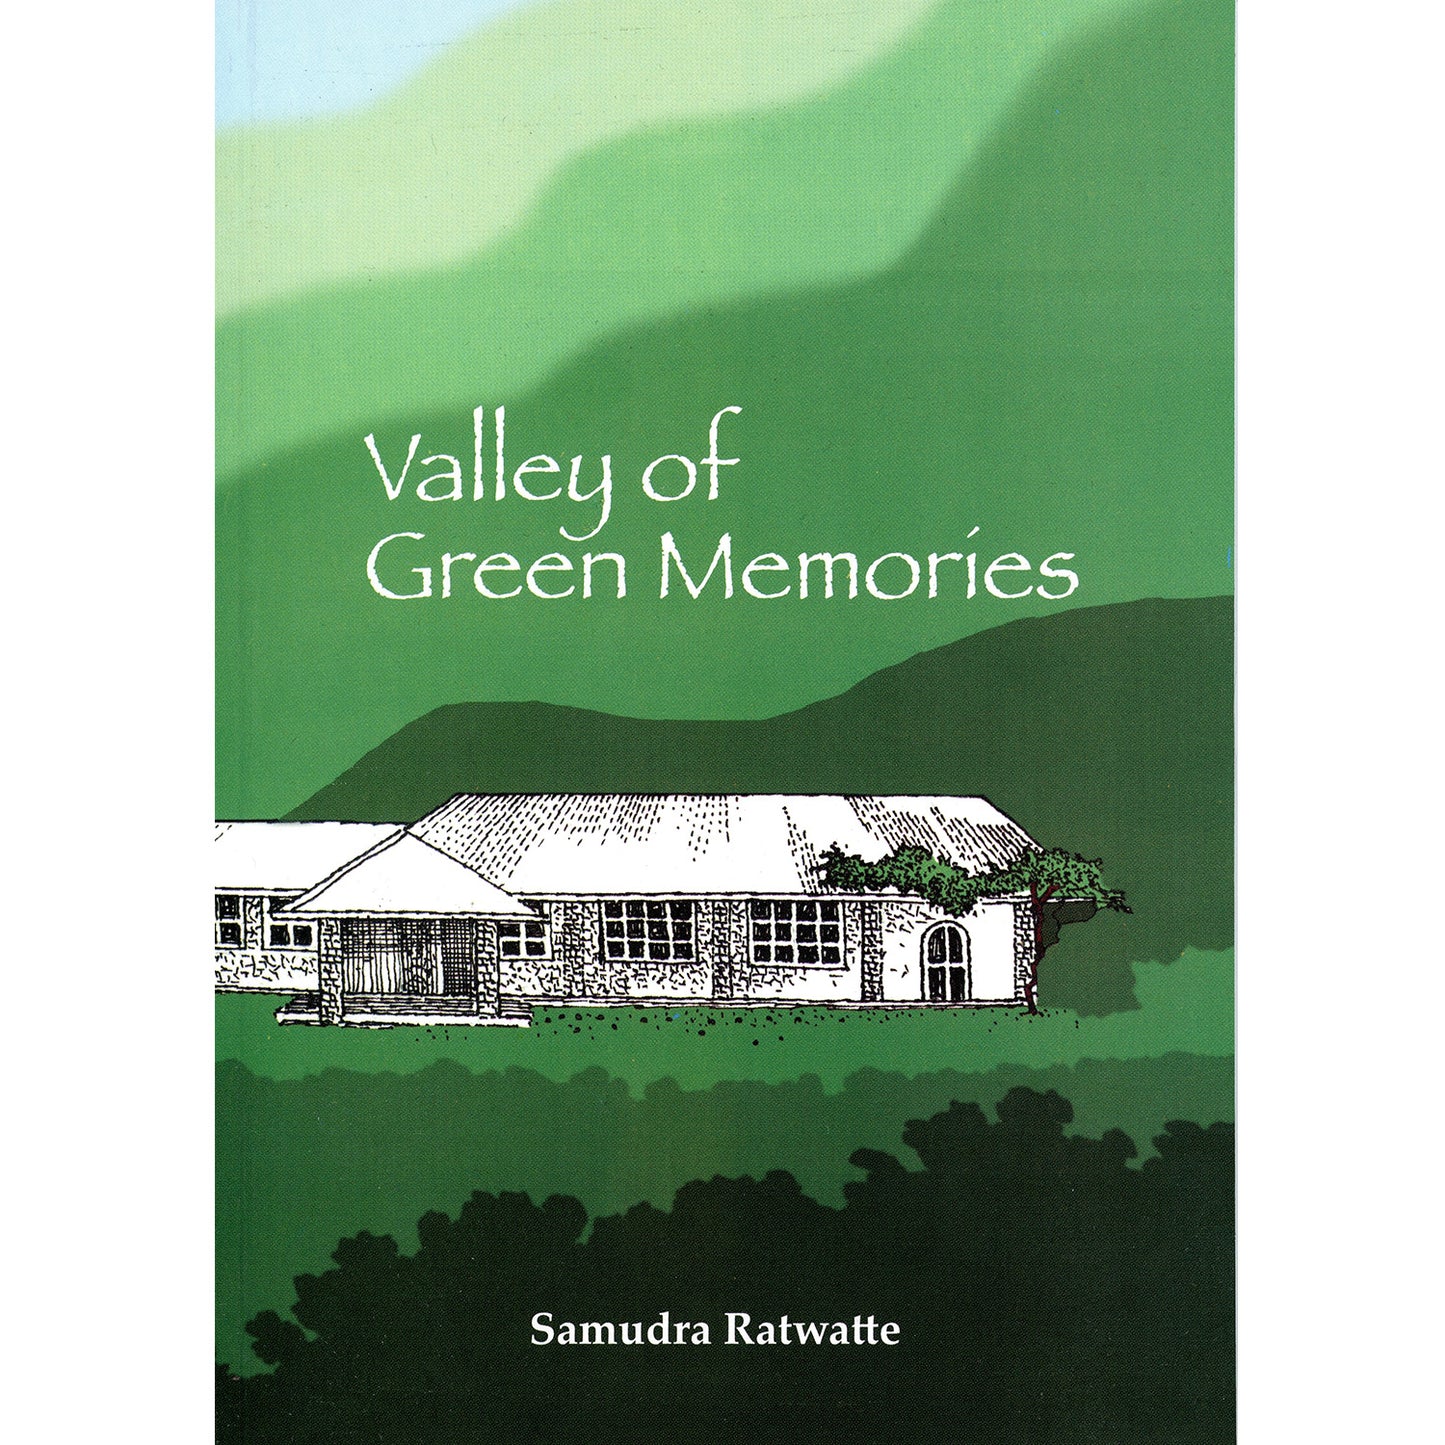 Valley of Green Memories by Samudra Ratwatte